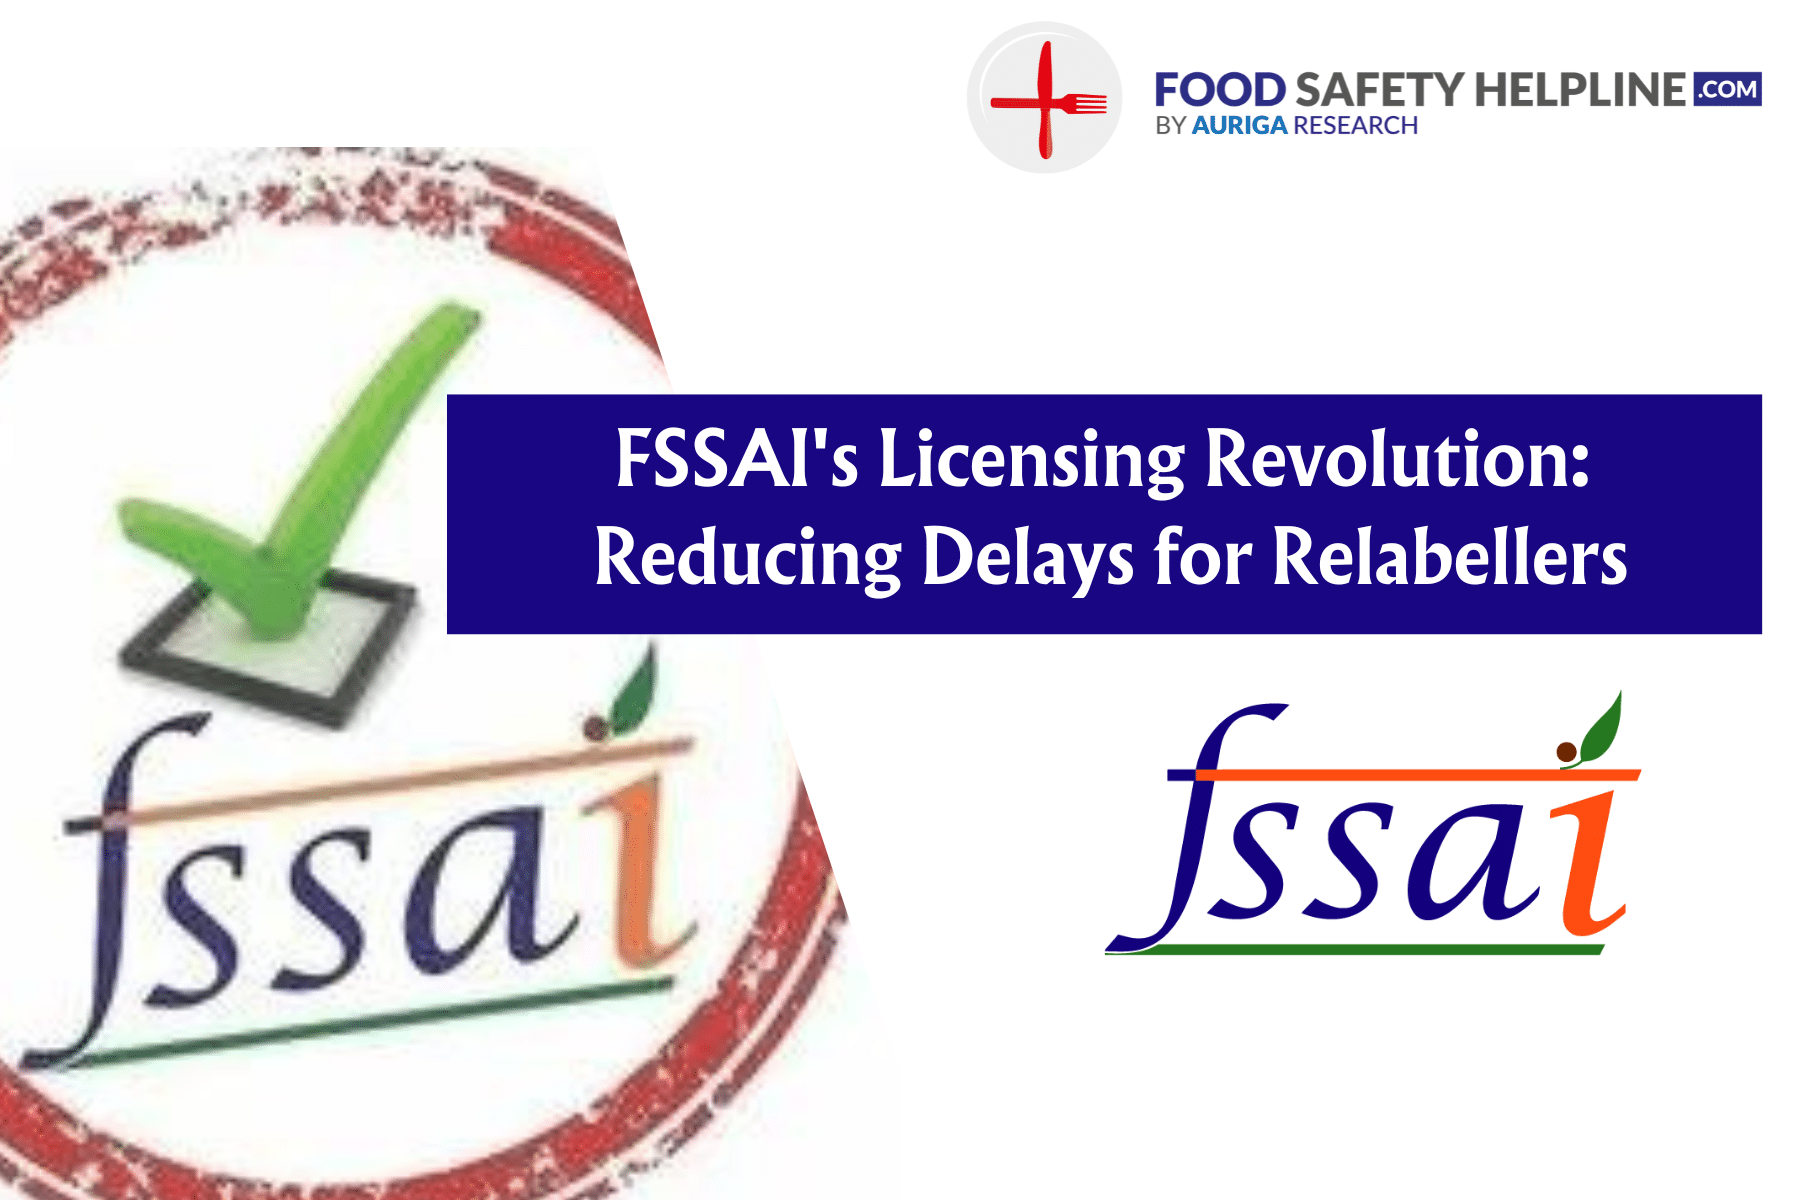 FSSAI’s Licensing Revolution: Reducing Delays for Relabellers